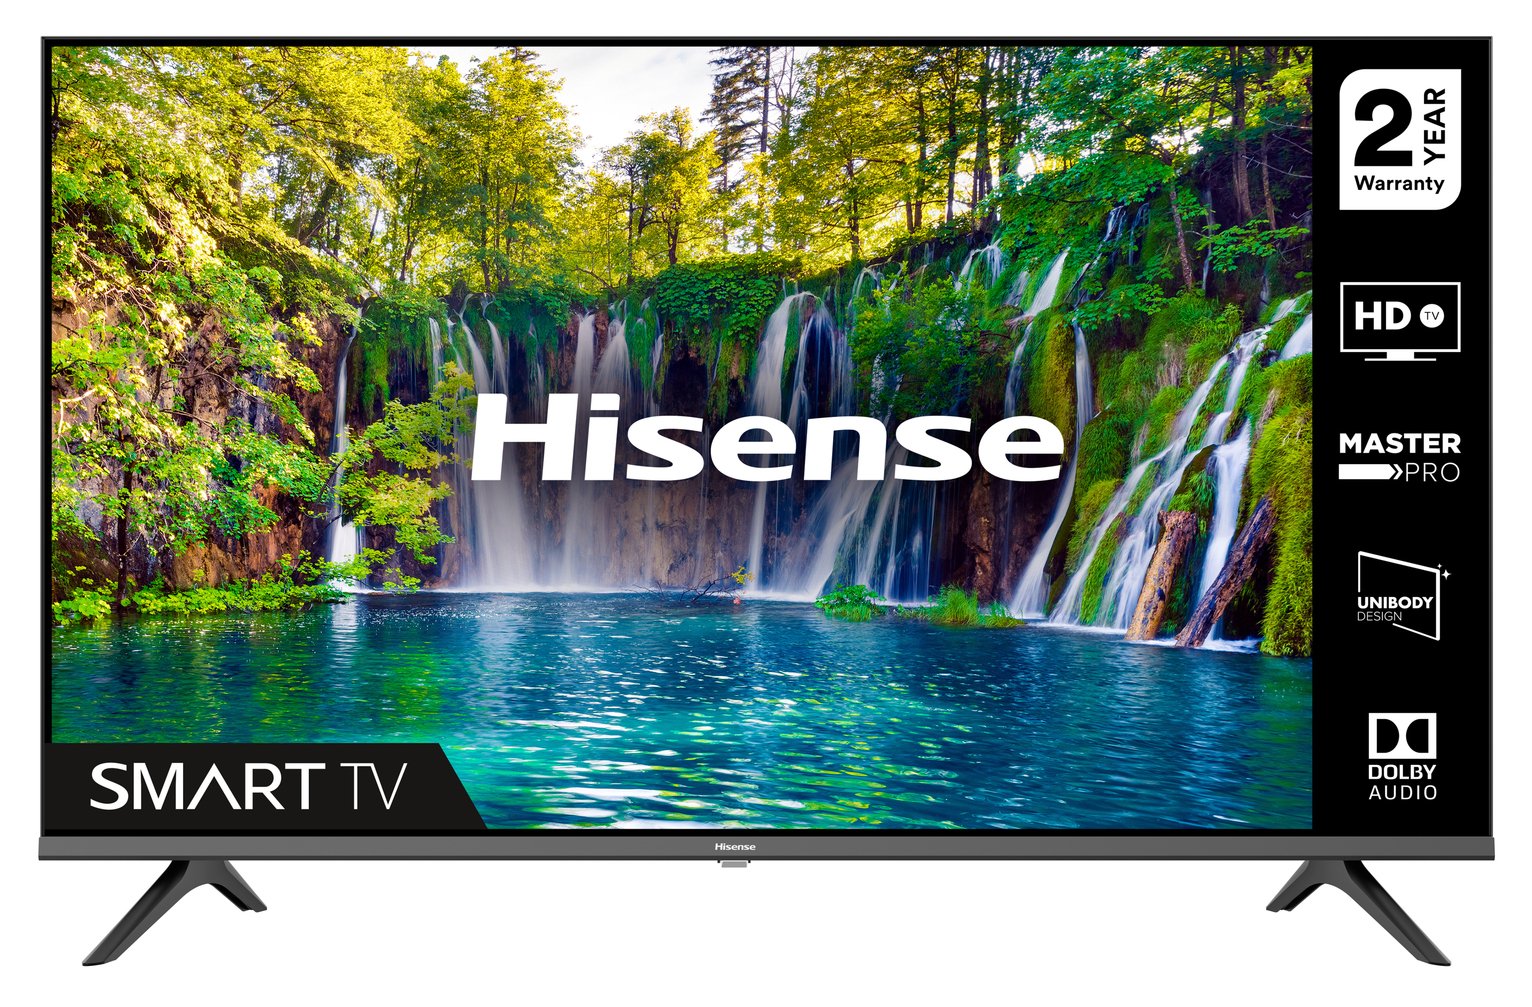 Hisense 32 Inch 32A5600FTUK Smart HD Ready LED TV Review